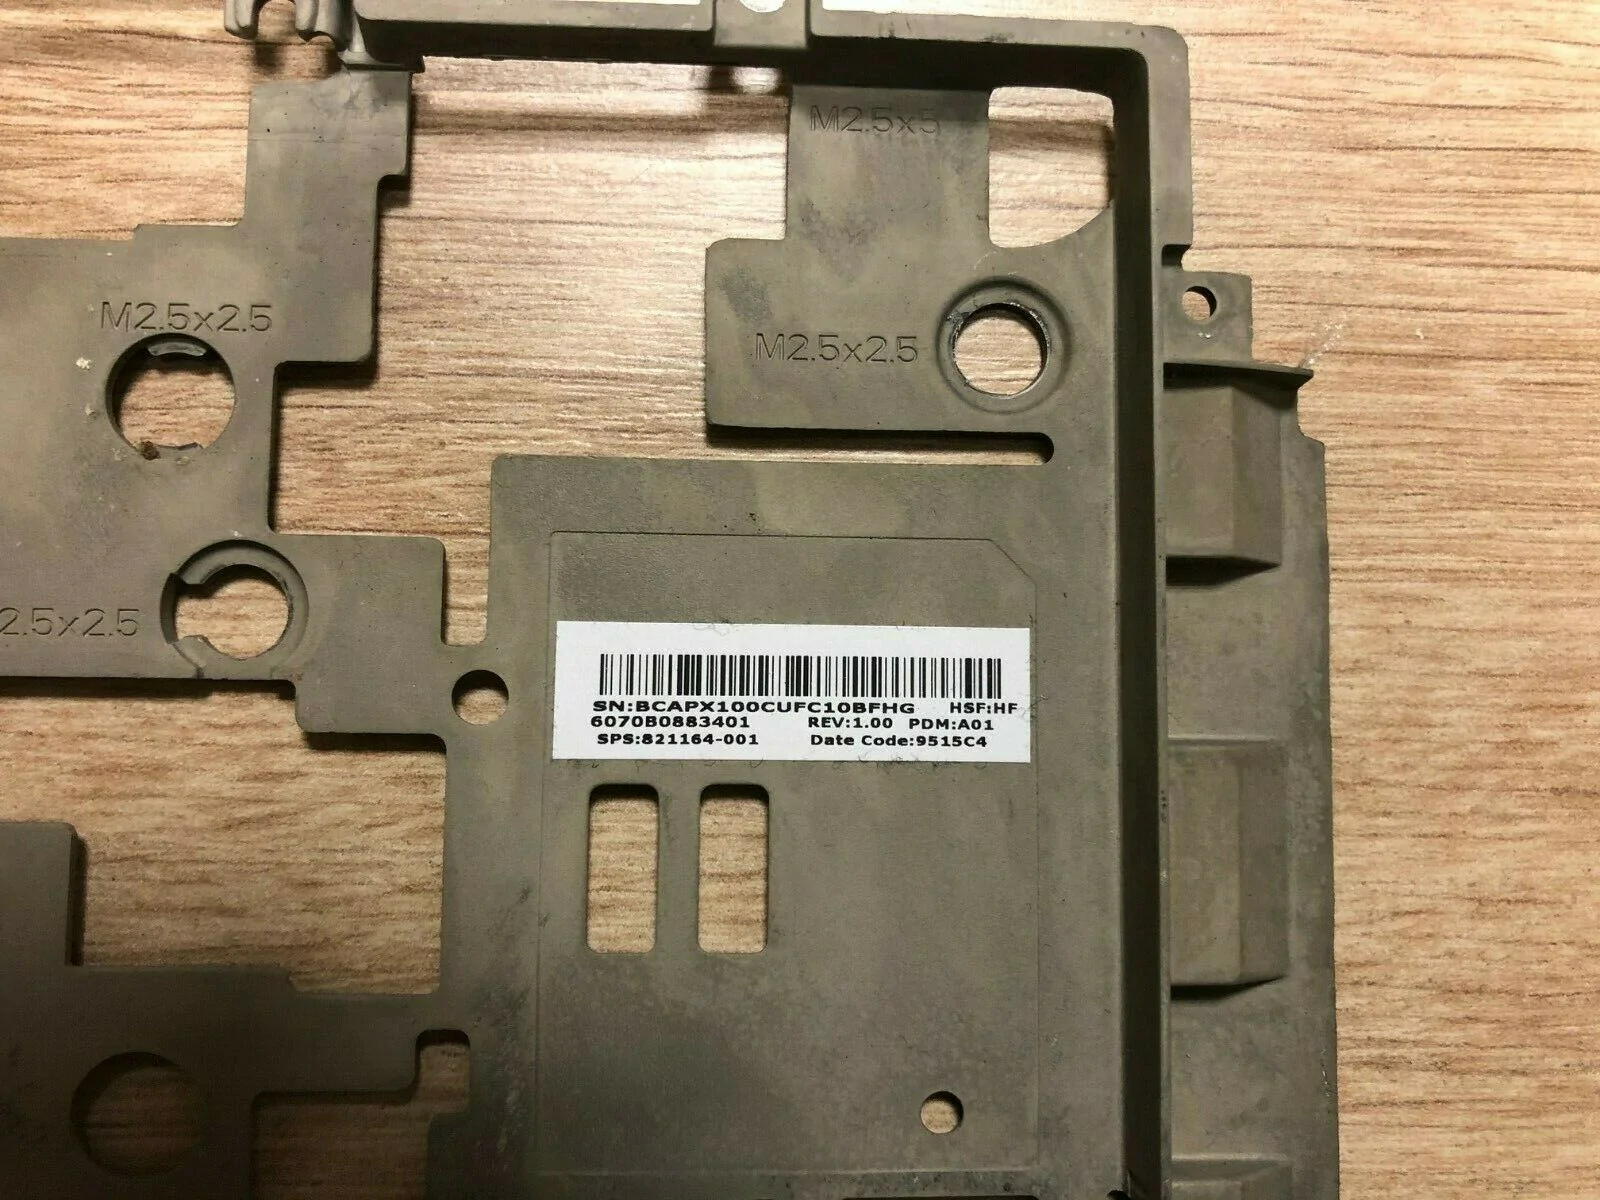 6070B0883401 internal base plate from HP 840 G3